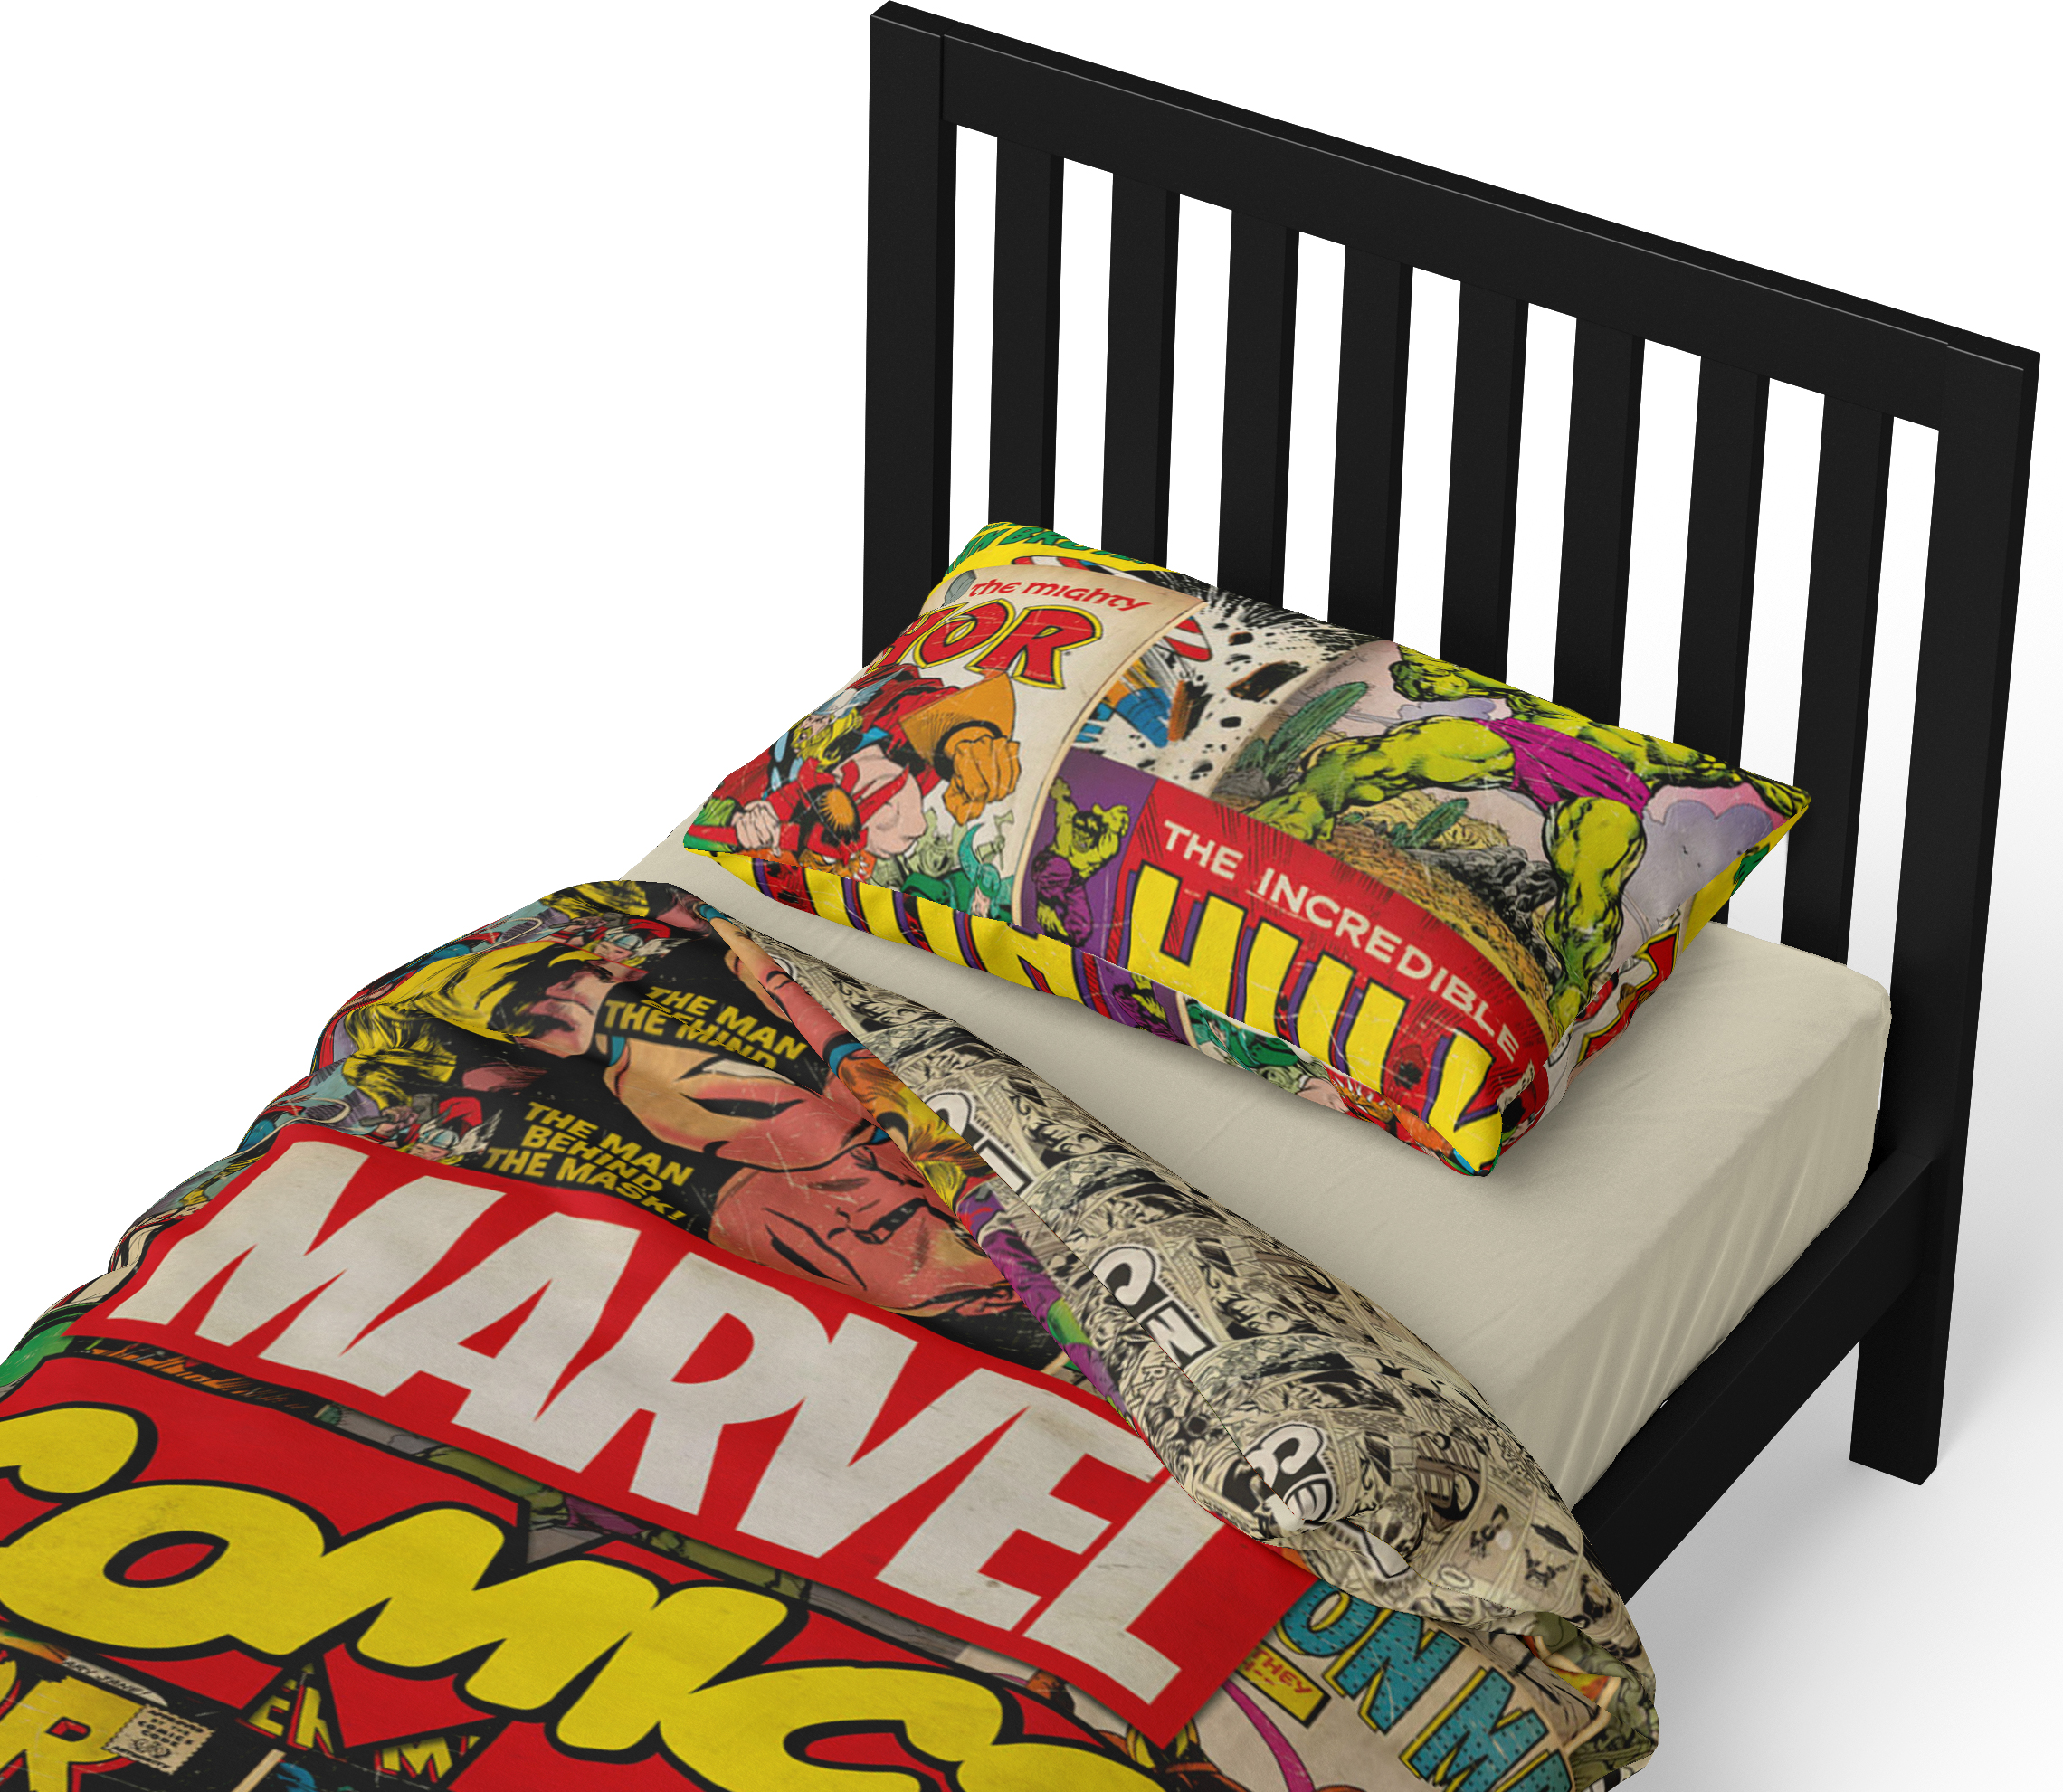 Marvel Comics Panel Single Bed Duvet Quilt Cover Set